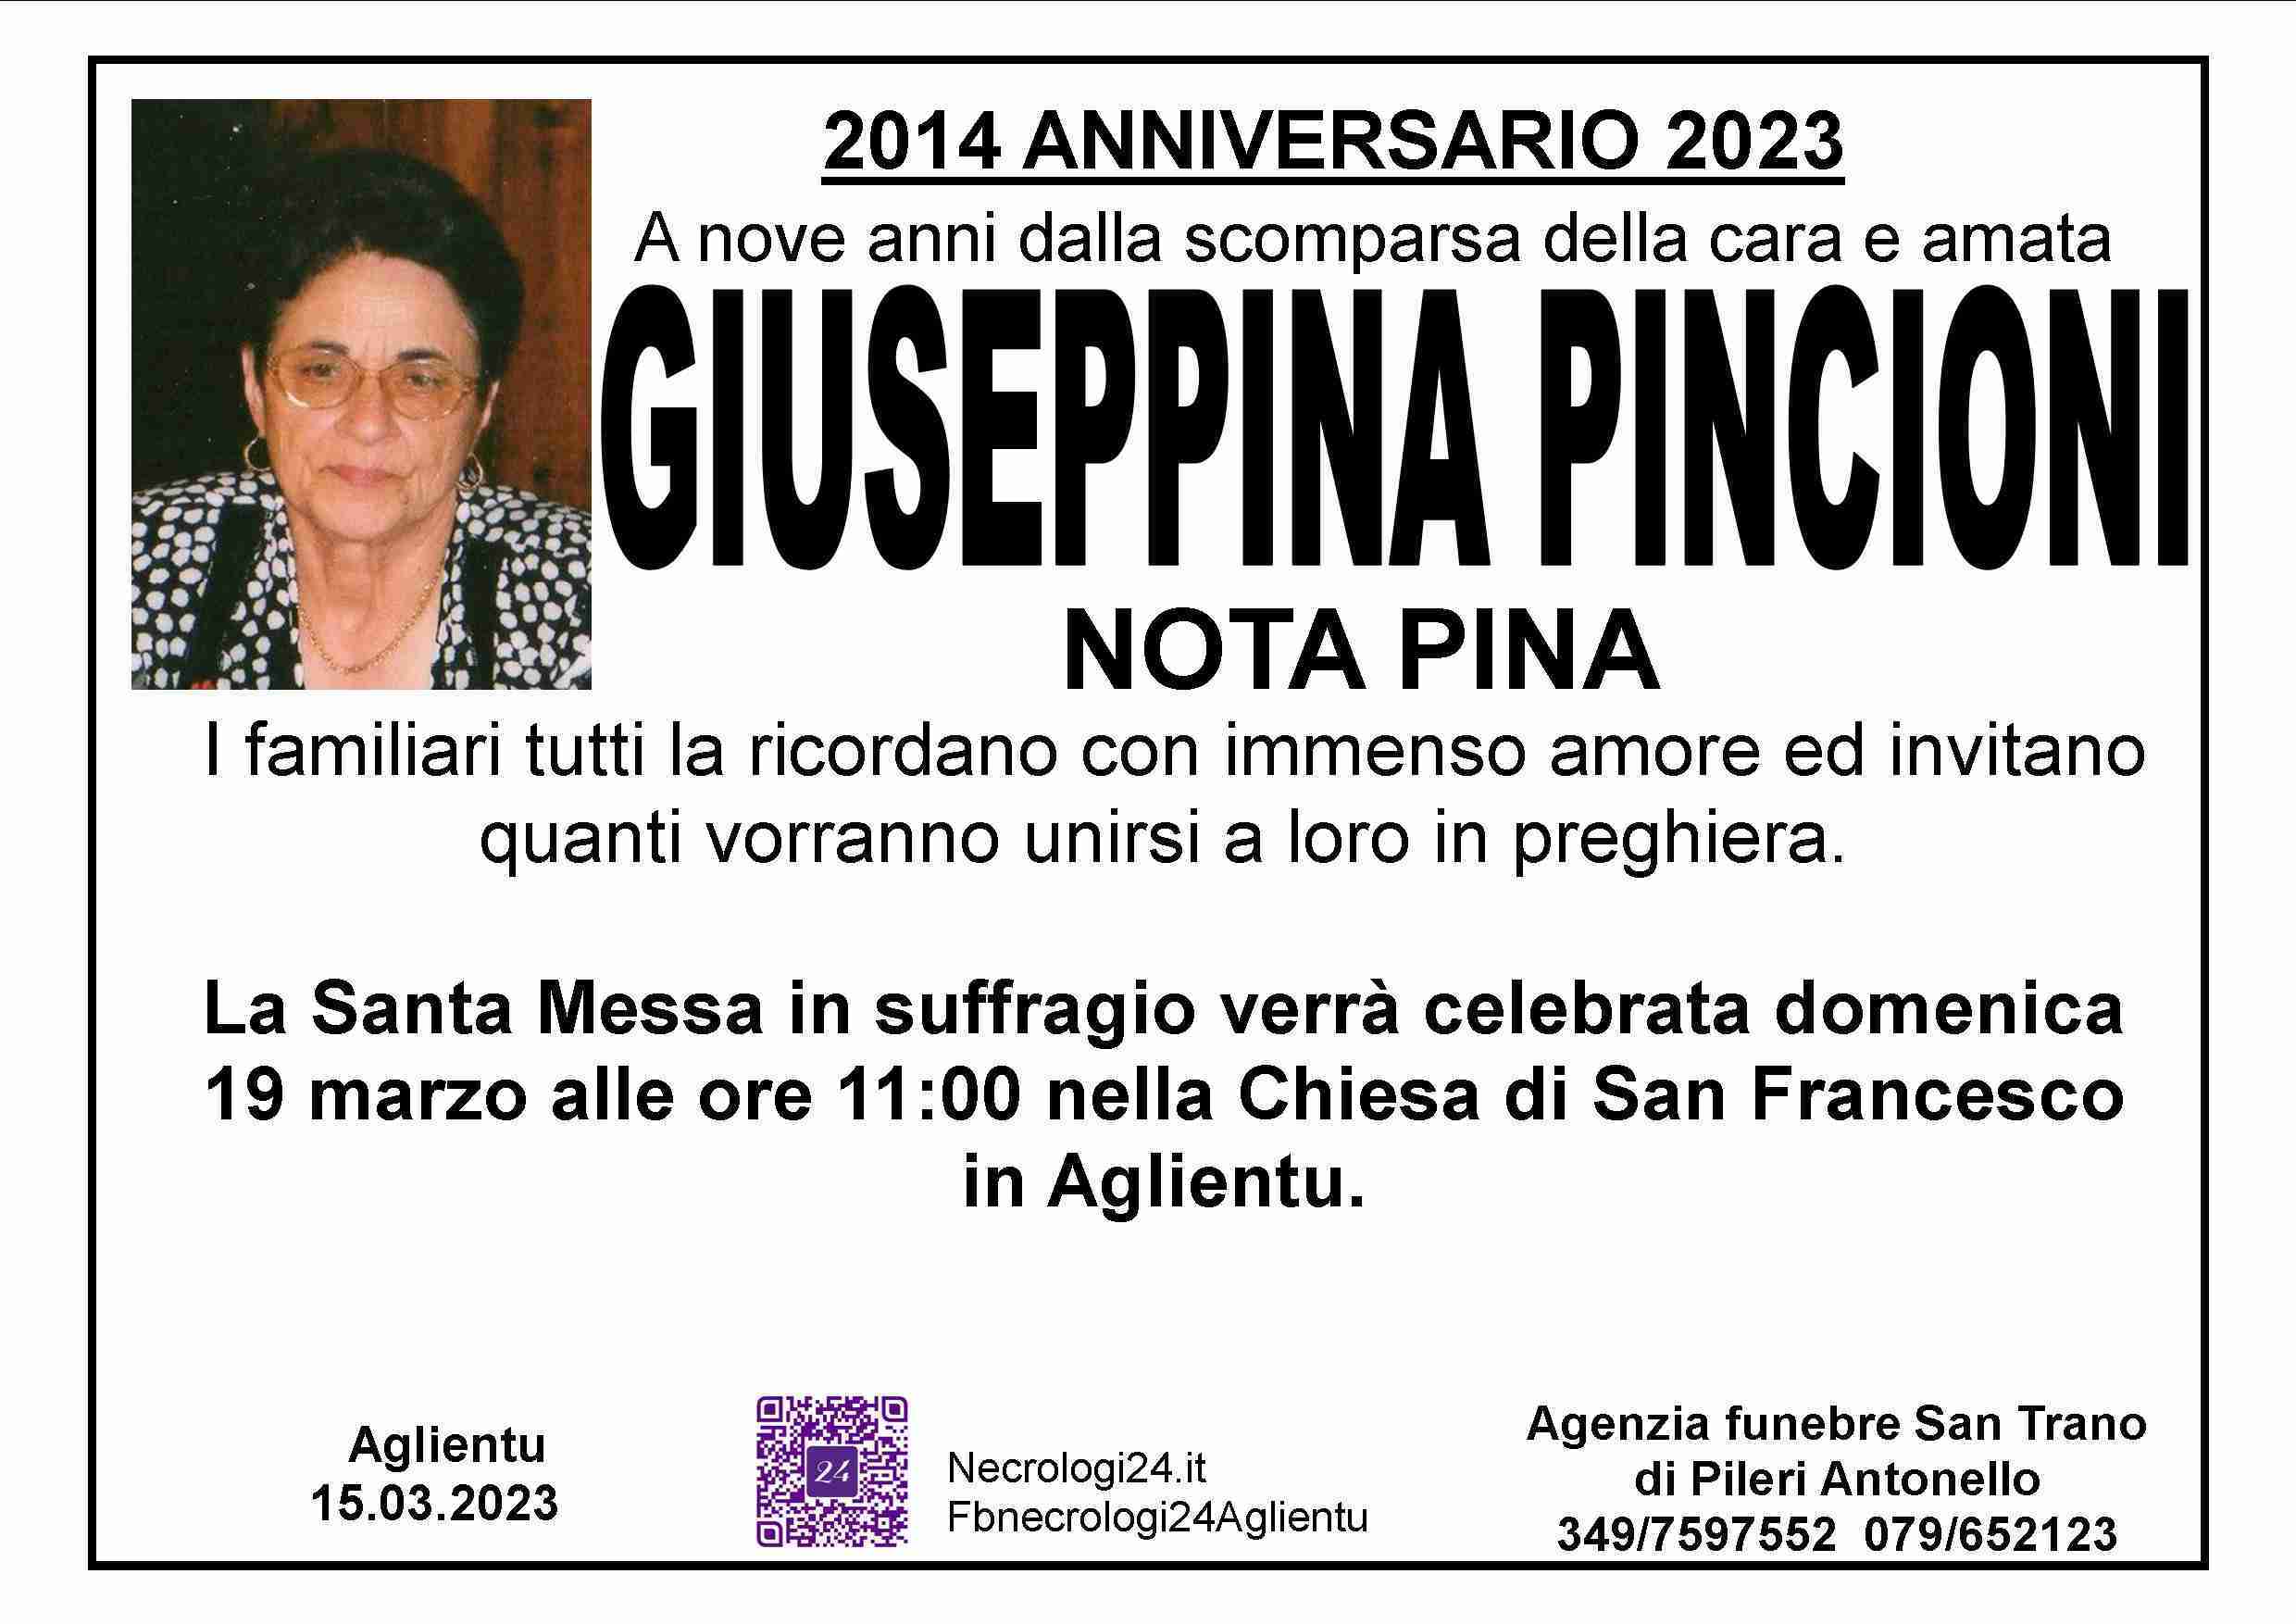 Giuseppina Pincioni